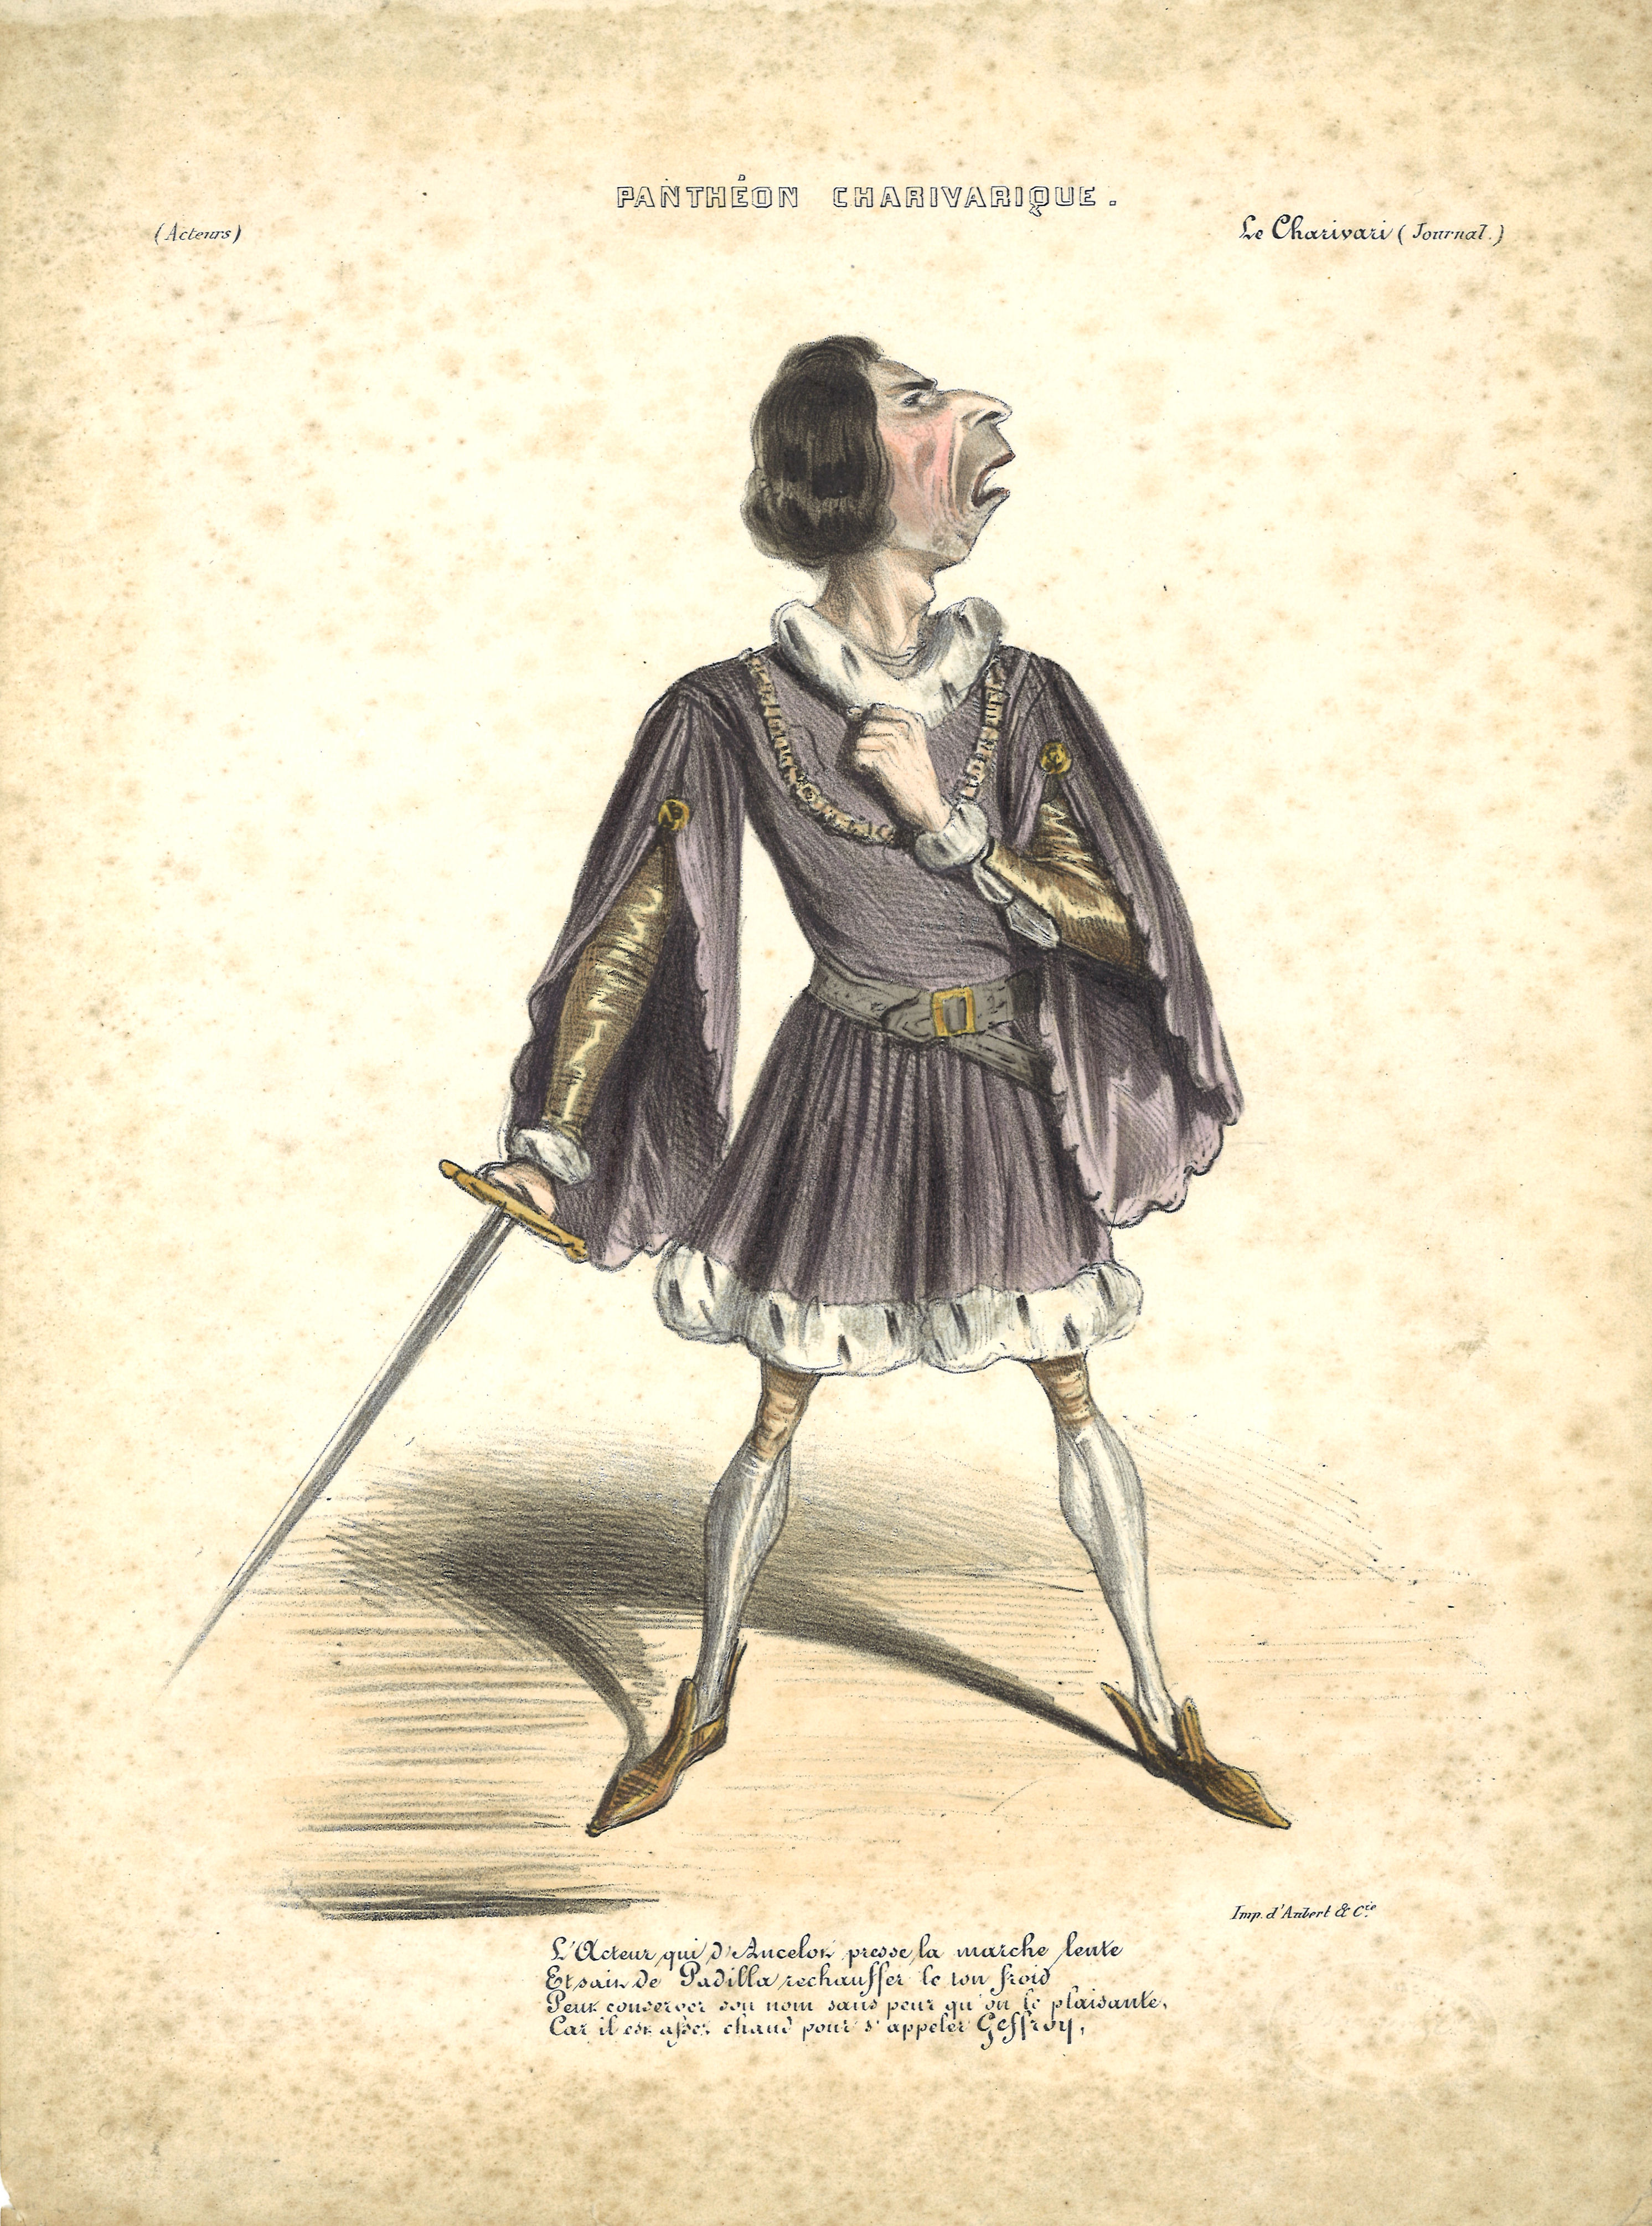 06-edmond-geffroy-dans-maria-padilla-caricature-panthc-on-charivarique-1838-